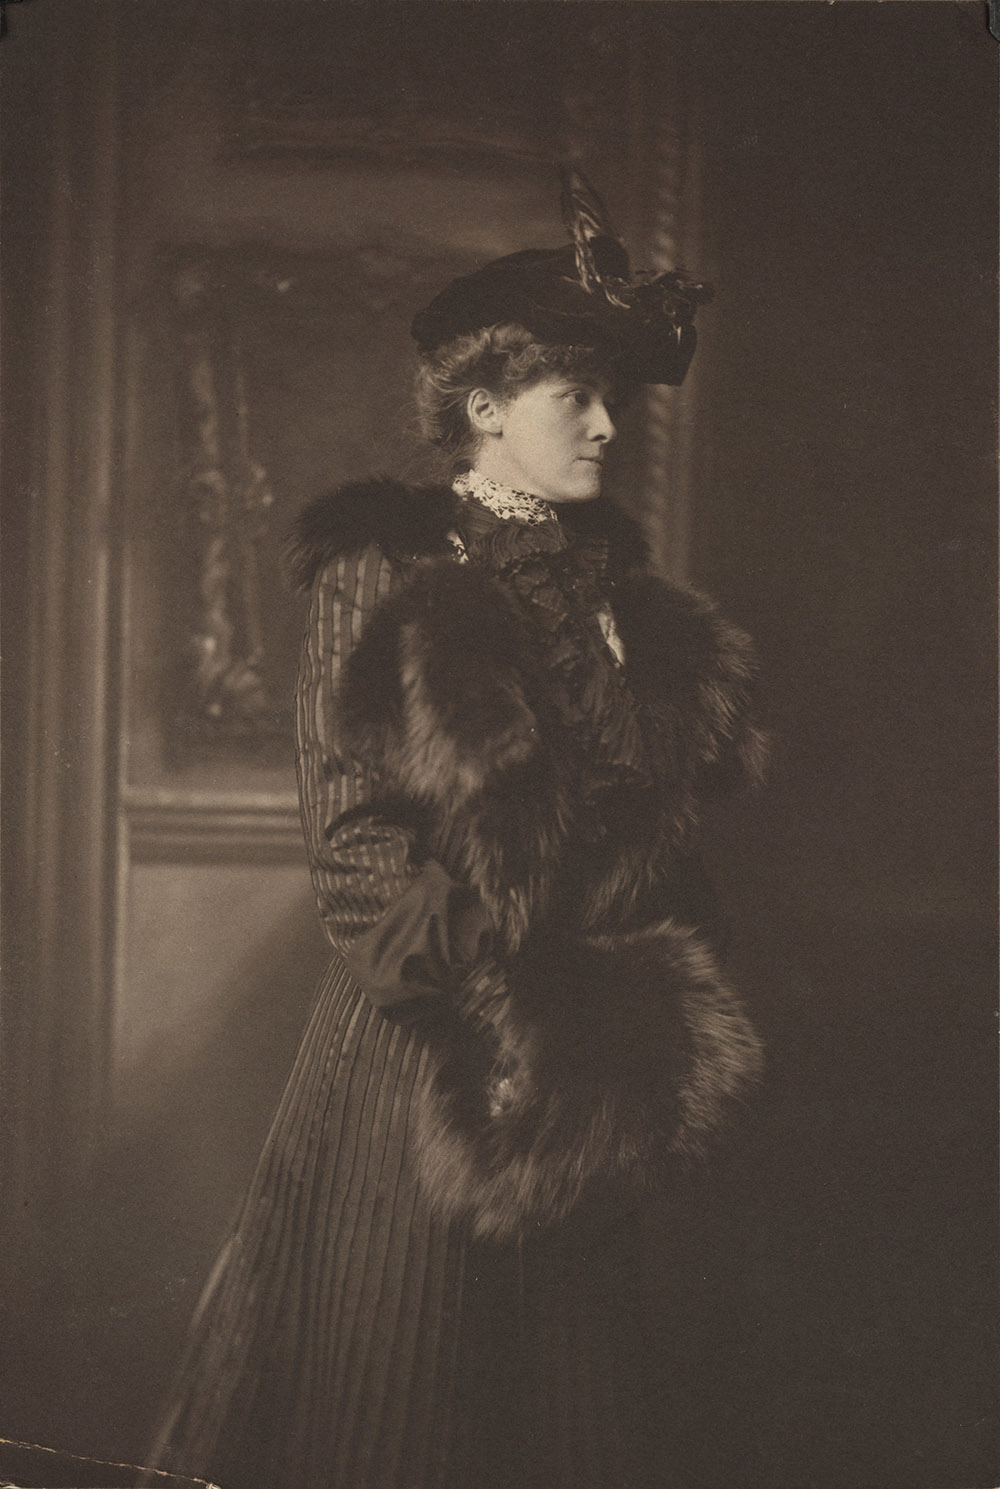 Edith Wharton in Newport, Rhode Island, 1907.